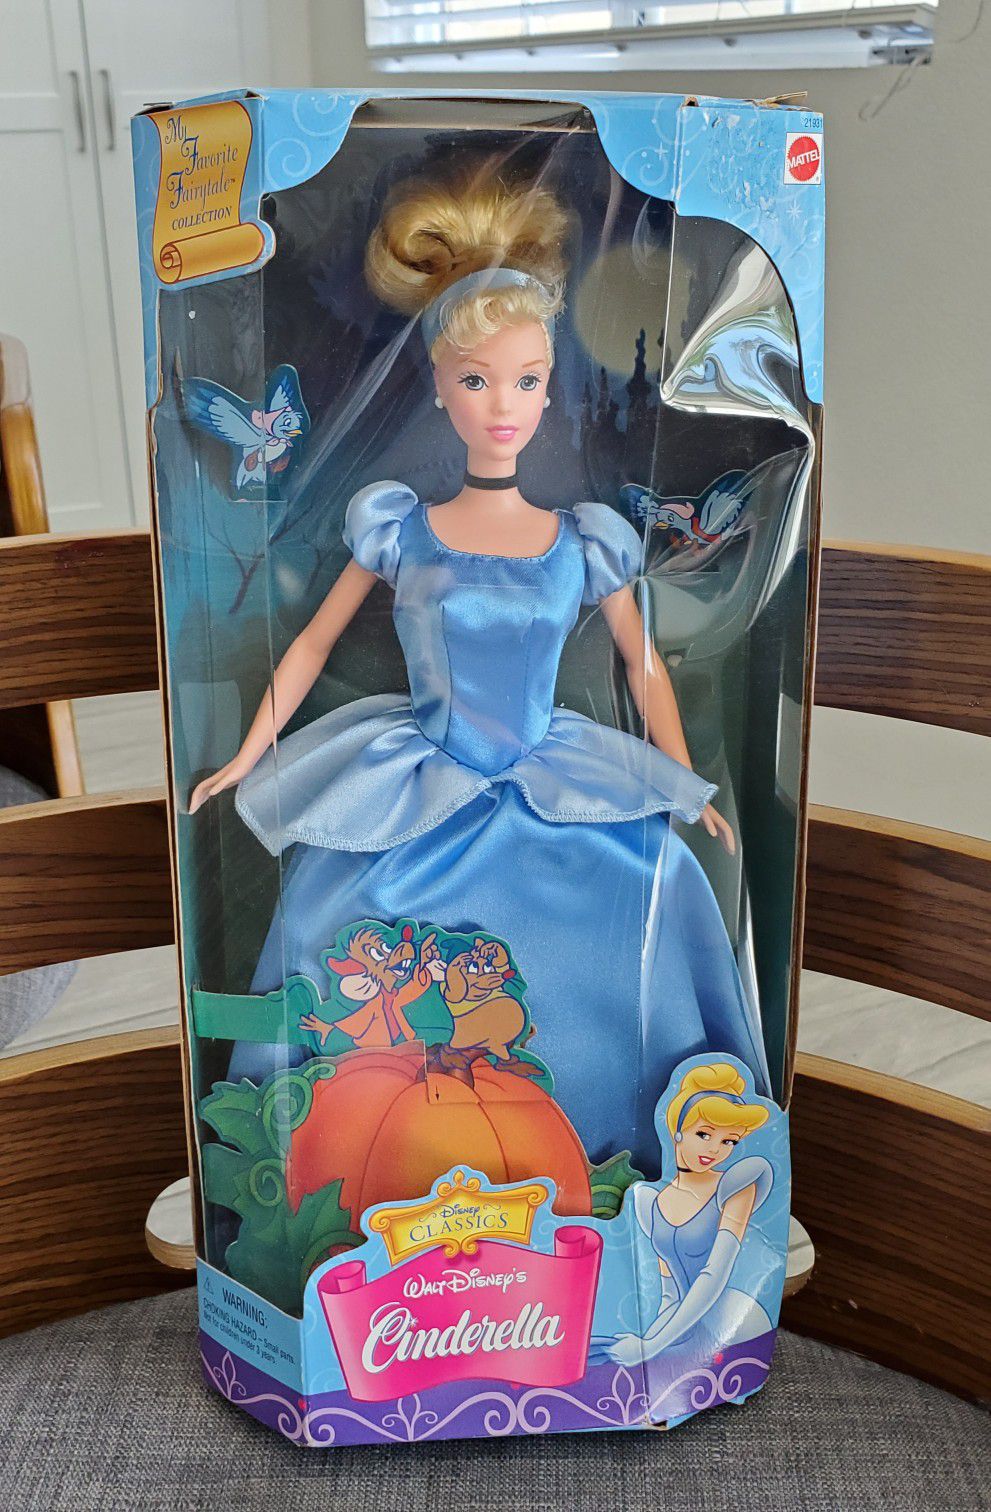 Disney classics Cinderella My Favorite Fairytale Collection Toy Doll Mattel